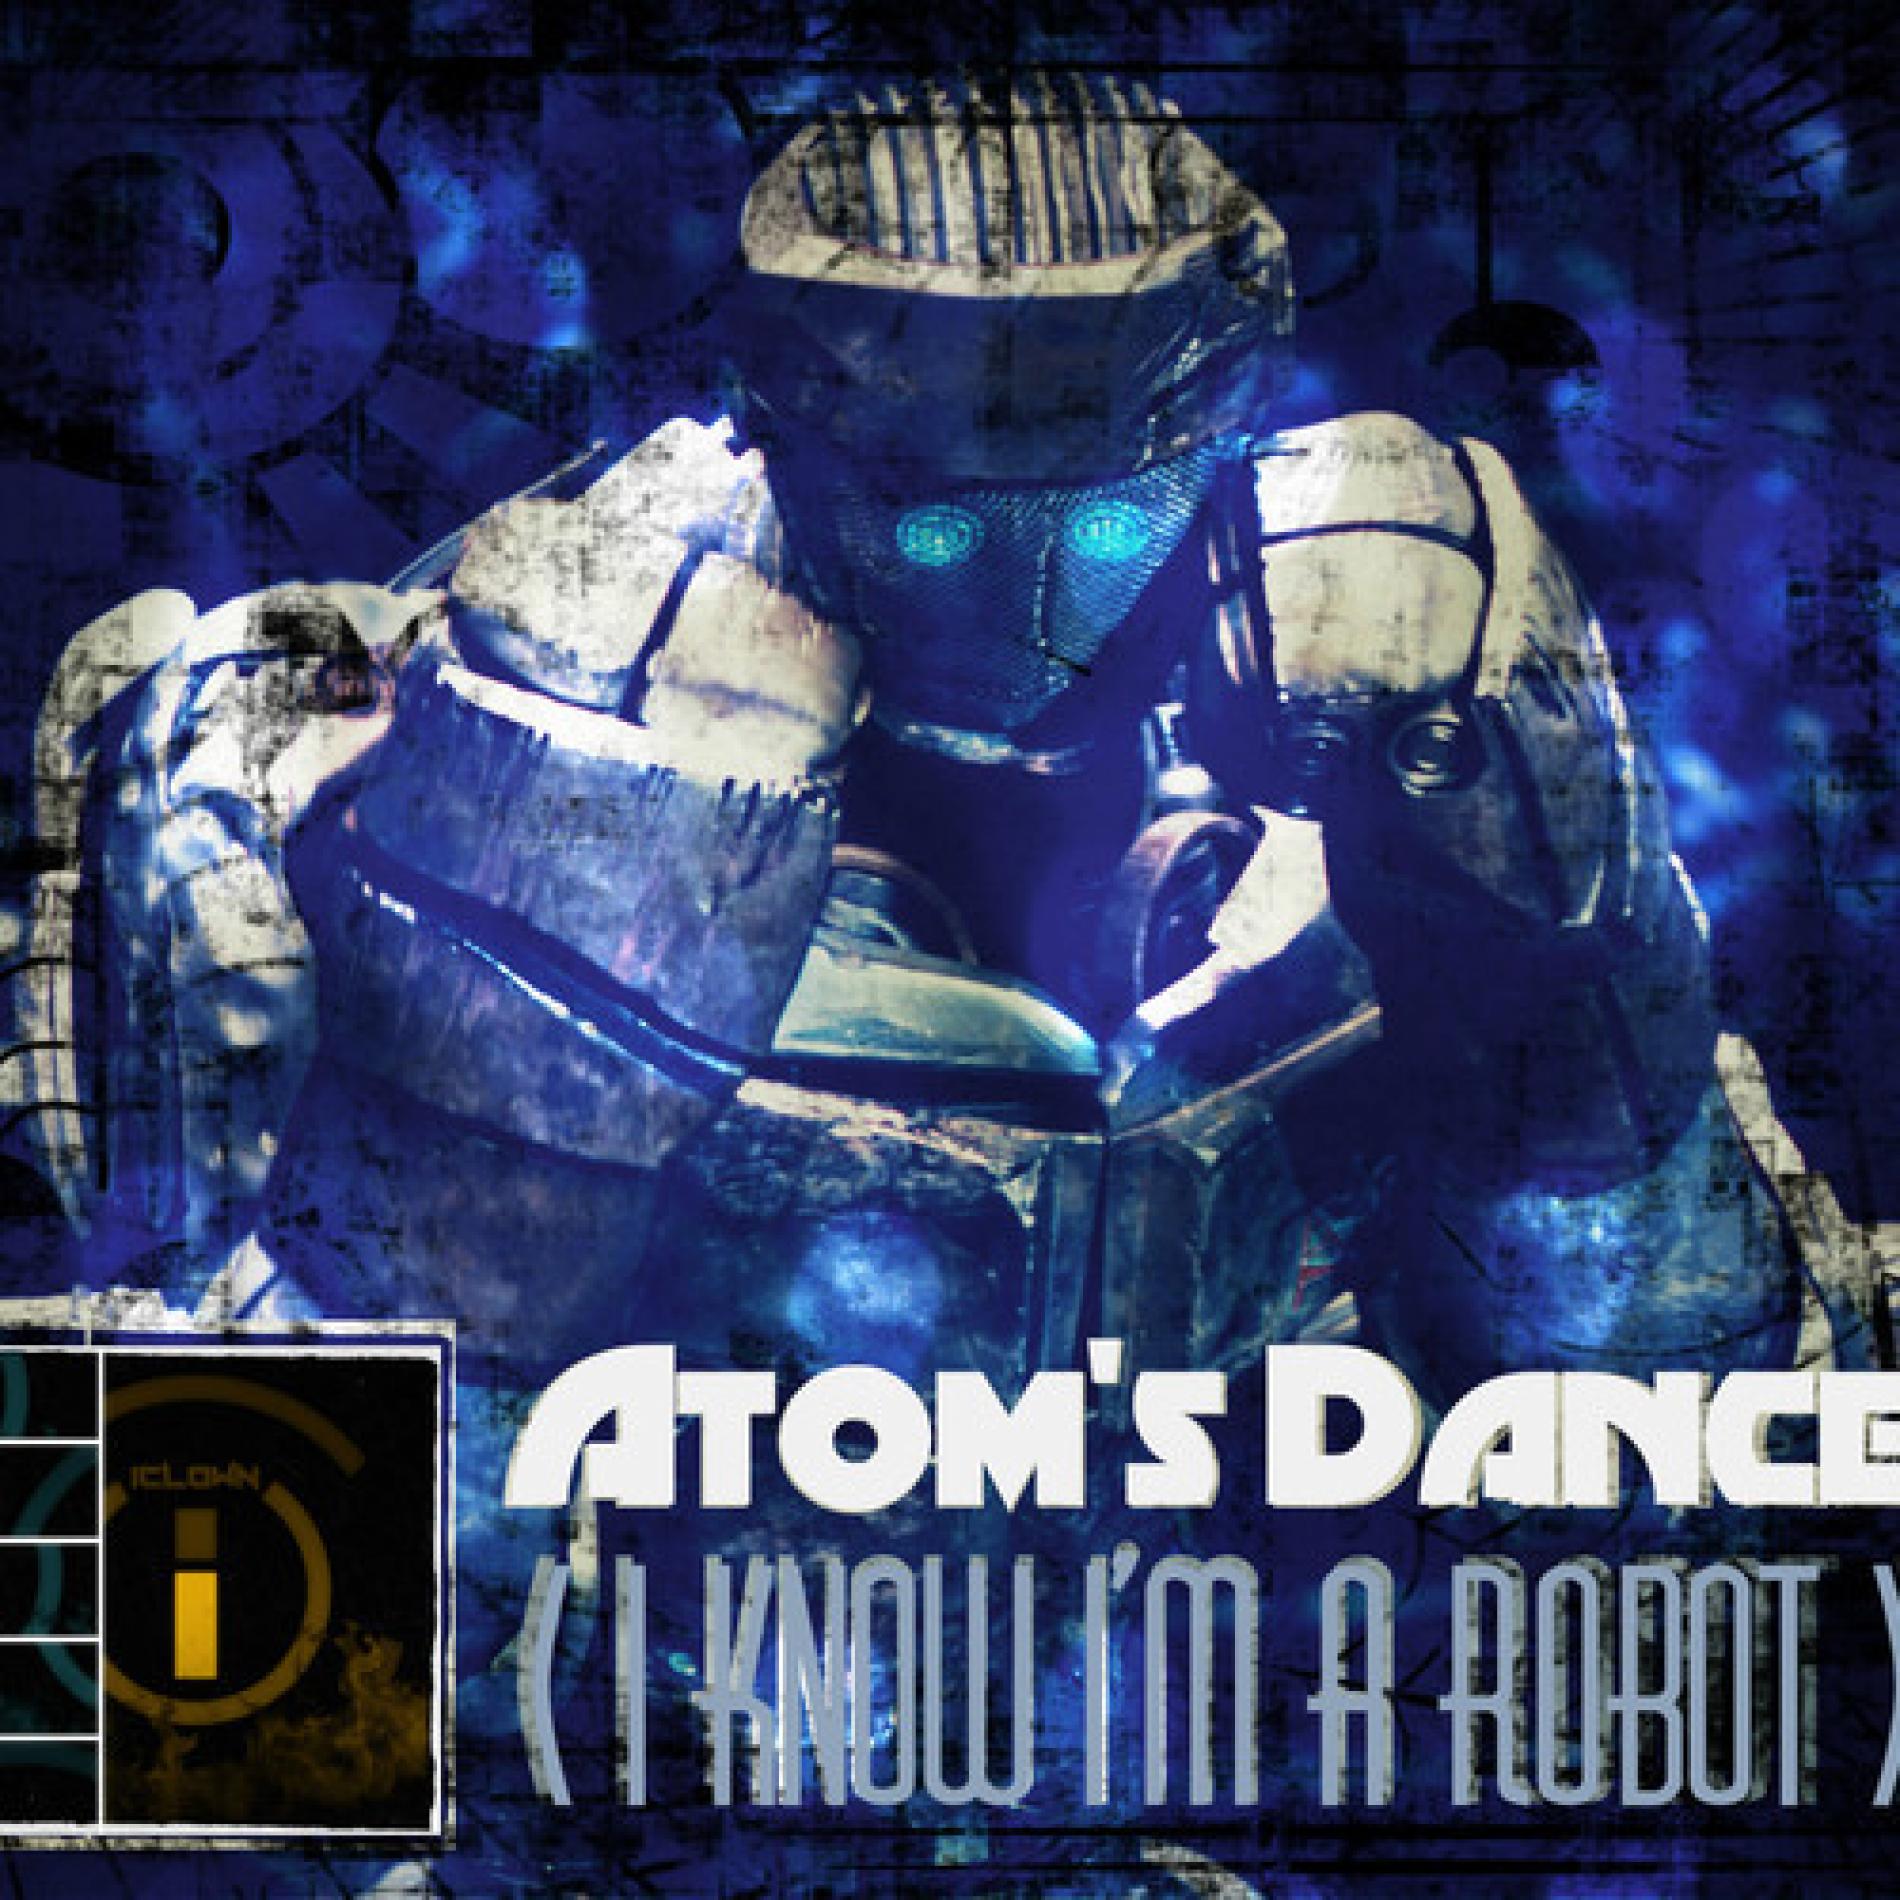 iClown – Atom’s Dance (I know I’m a Robot)